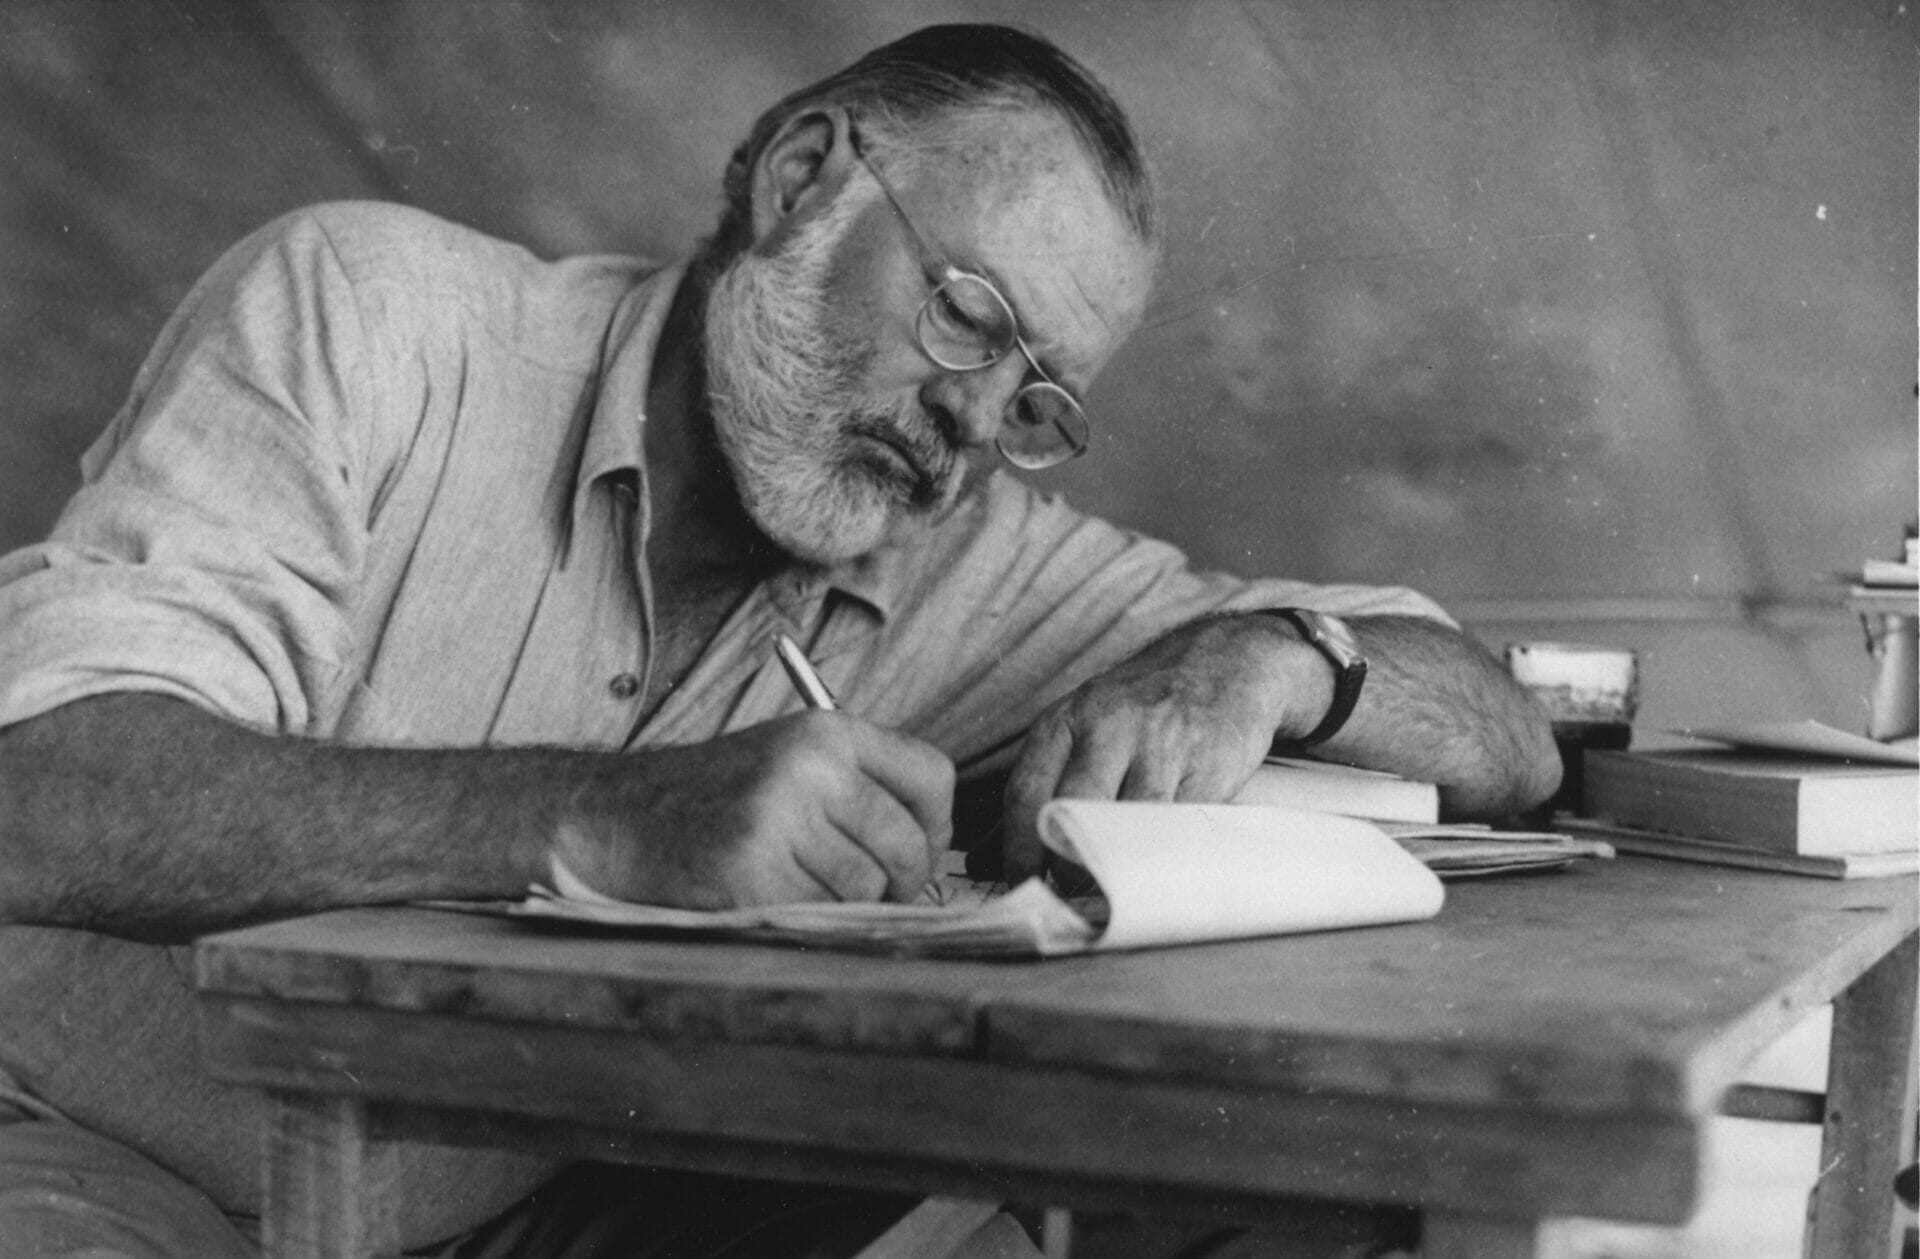 The Moods of Ernest Hemingway